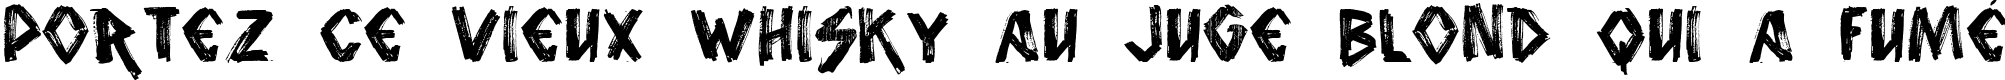 Пример написания шрифтом vtks animal 2 текста на французском